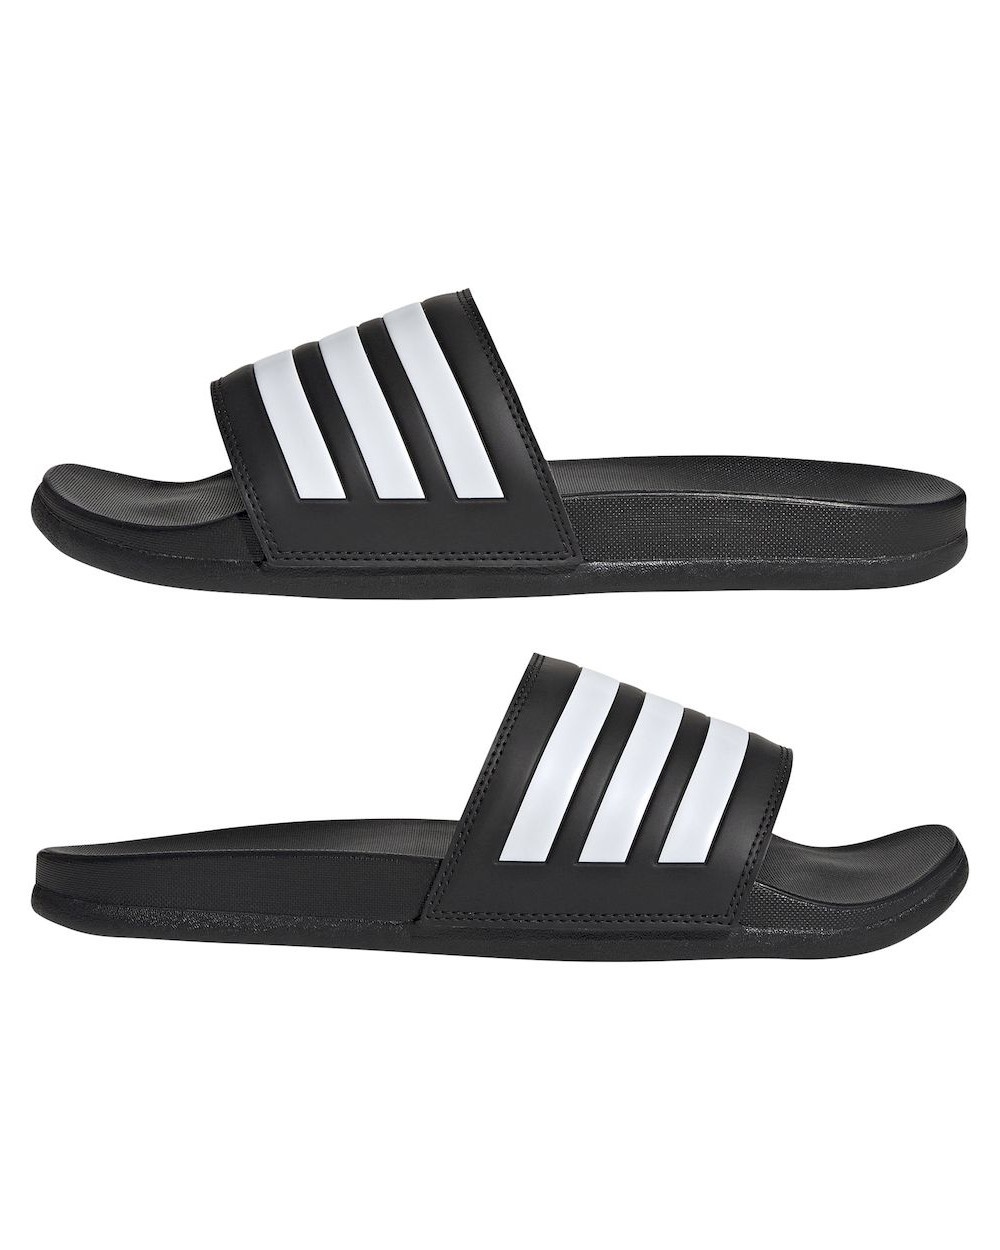  Ciabatte sandali UOMO Adidas ADILETTE Comfort Nero Bianco